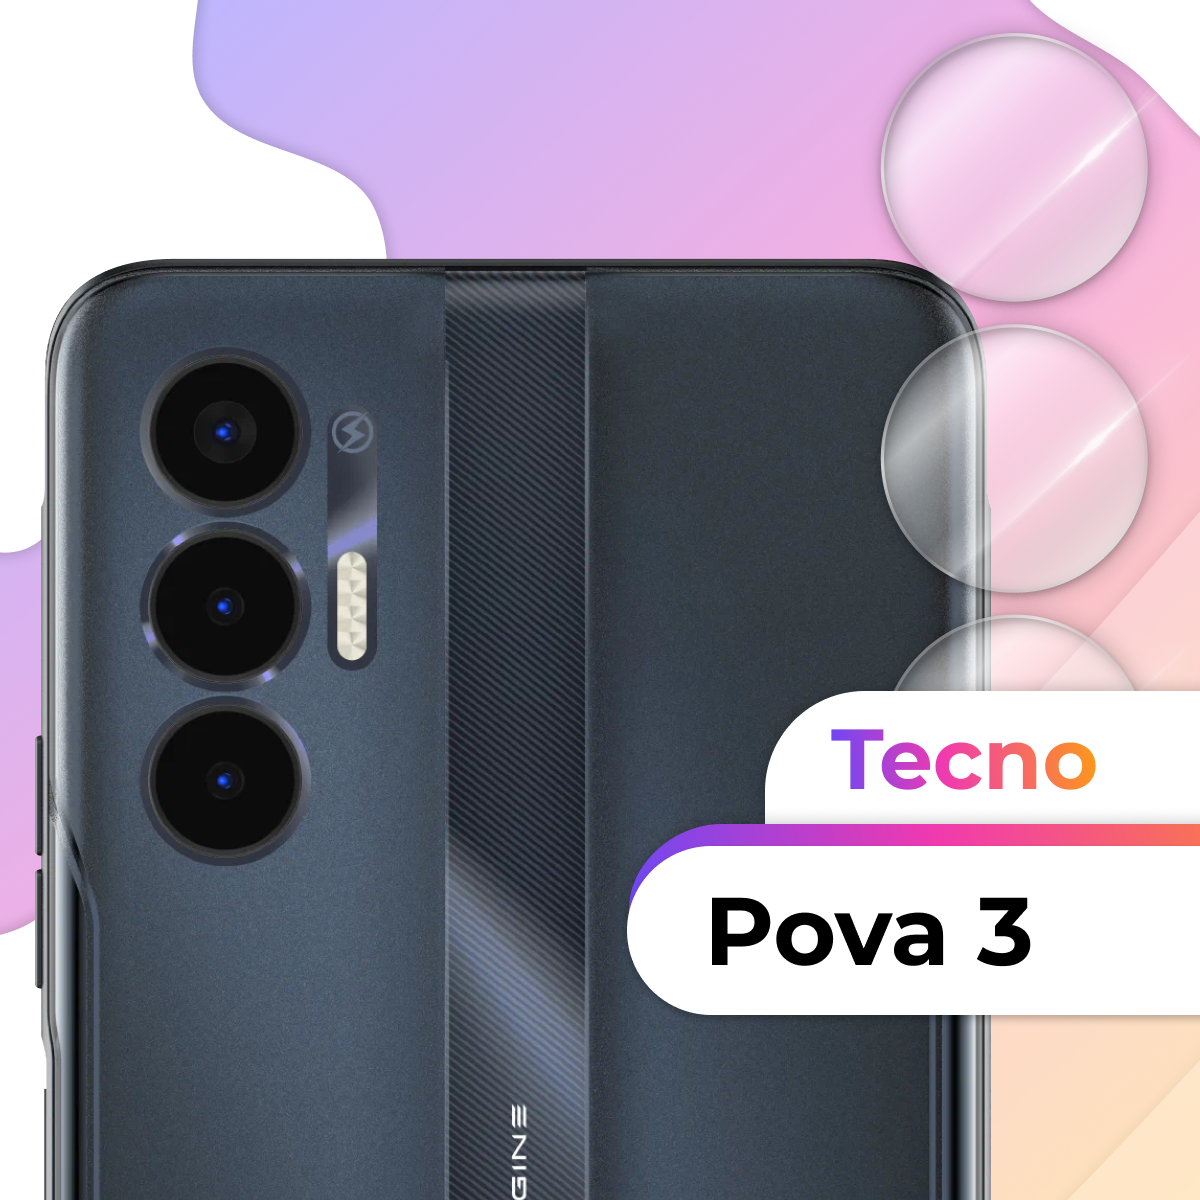 Защитное стекло на камеру смартфона Tecno Pova 3 / Прозрачное противоударное стекло для камеры телефона Техно Пова 3